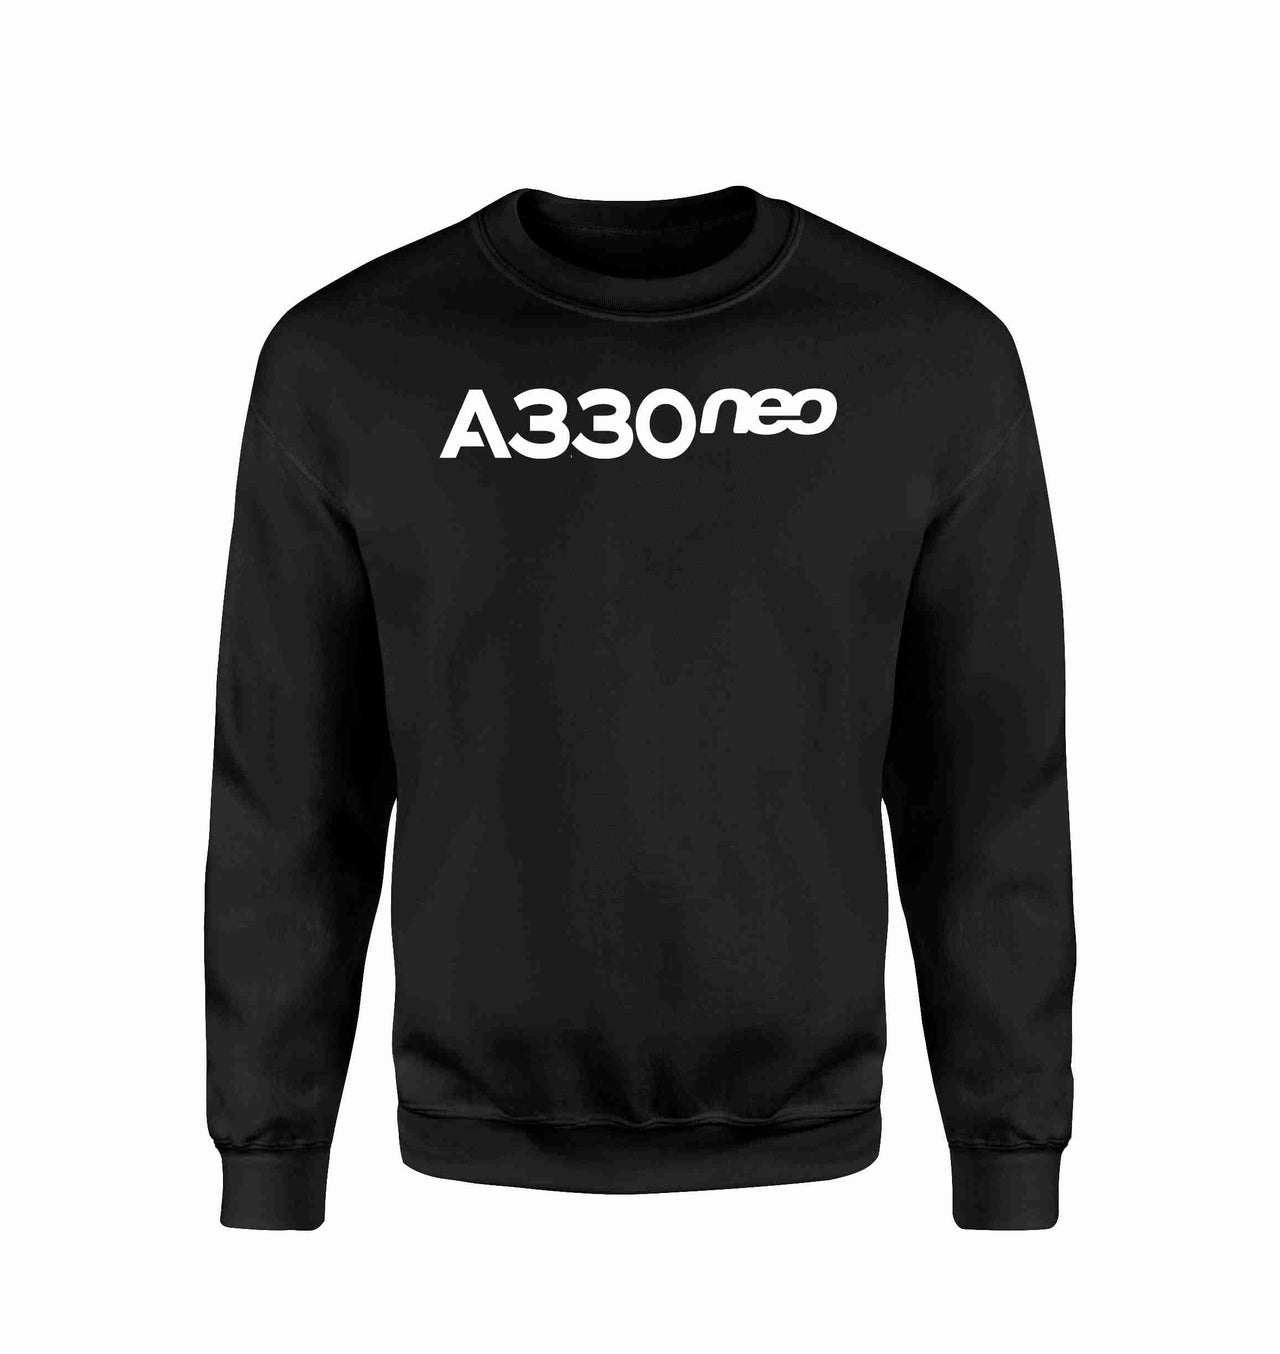 A330neo & Text Designed Sweatshirts